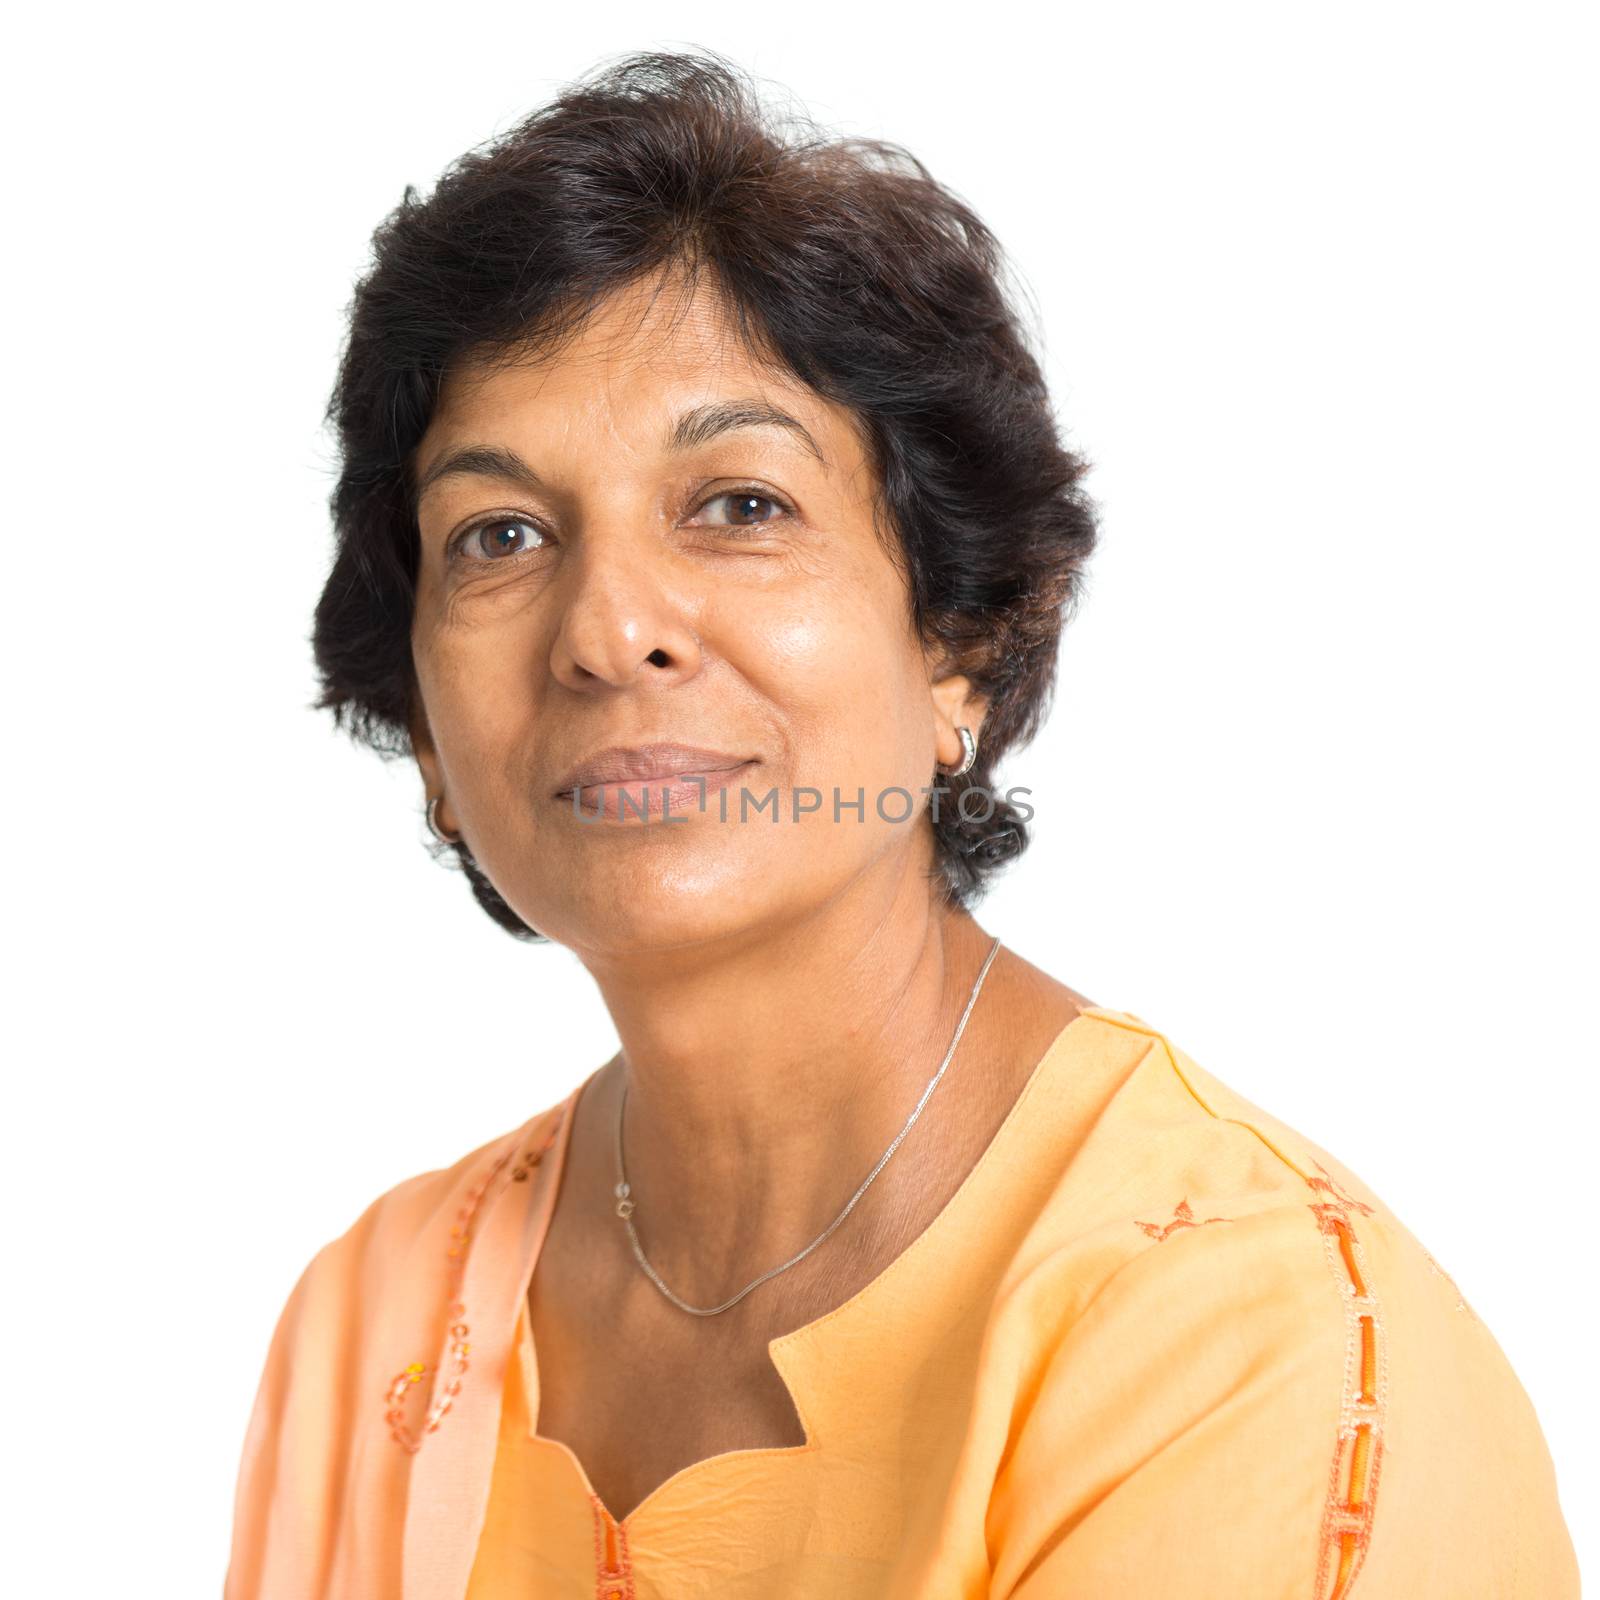 Indian mature woman by szefei